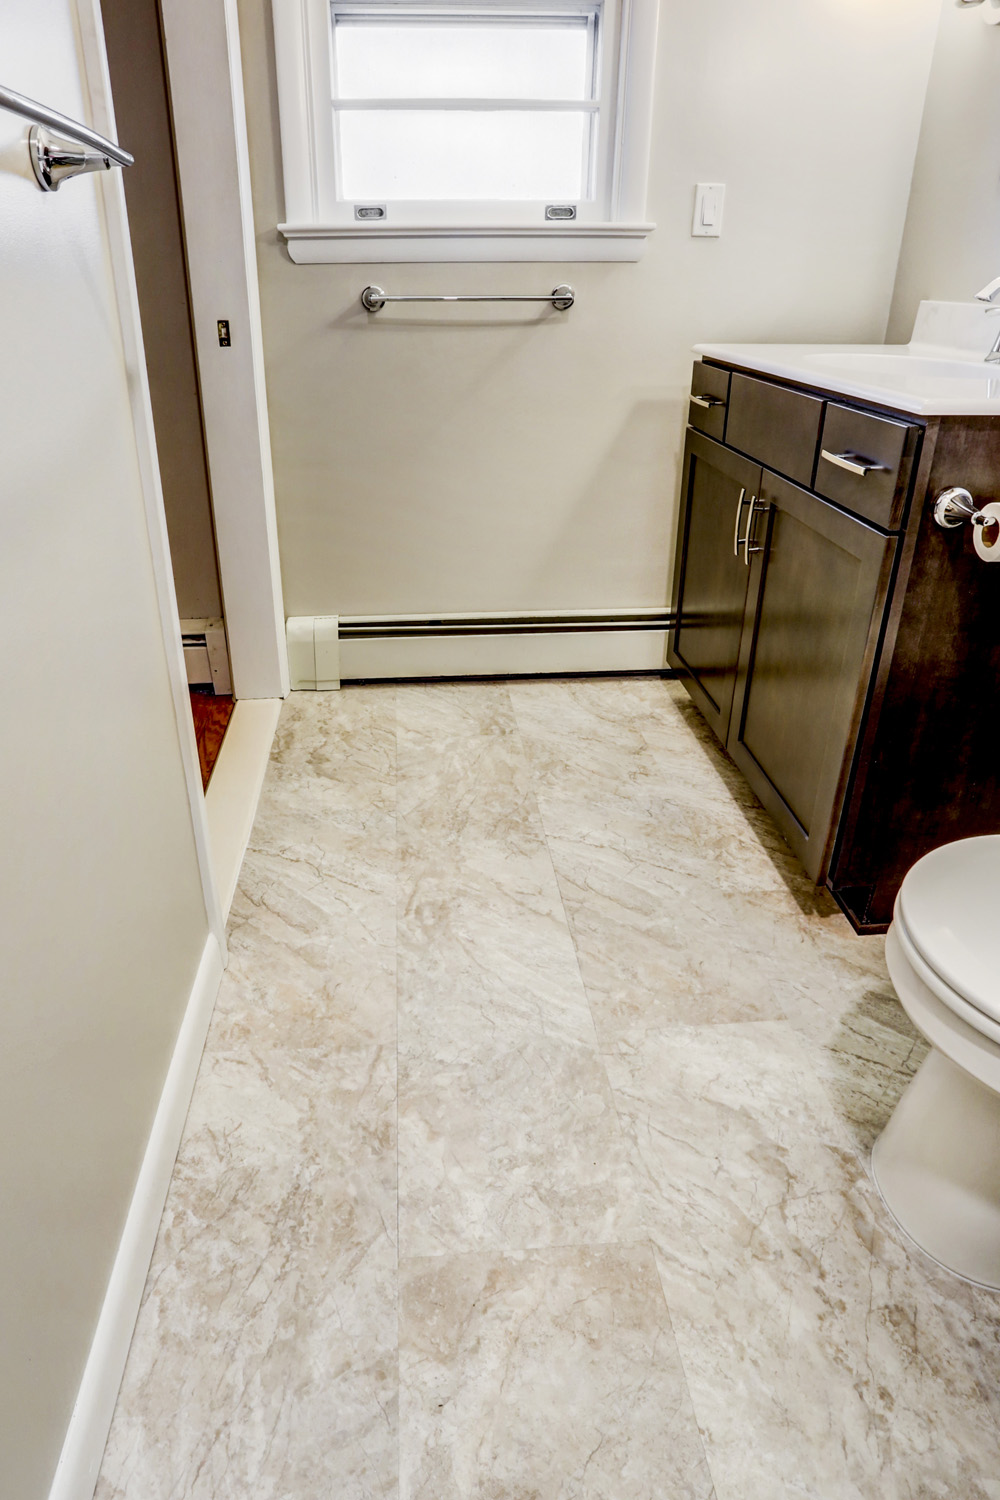 Manheim Township Bathroom Remodel with tile floor